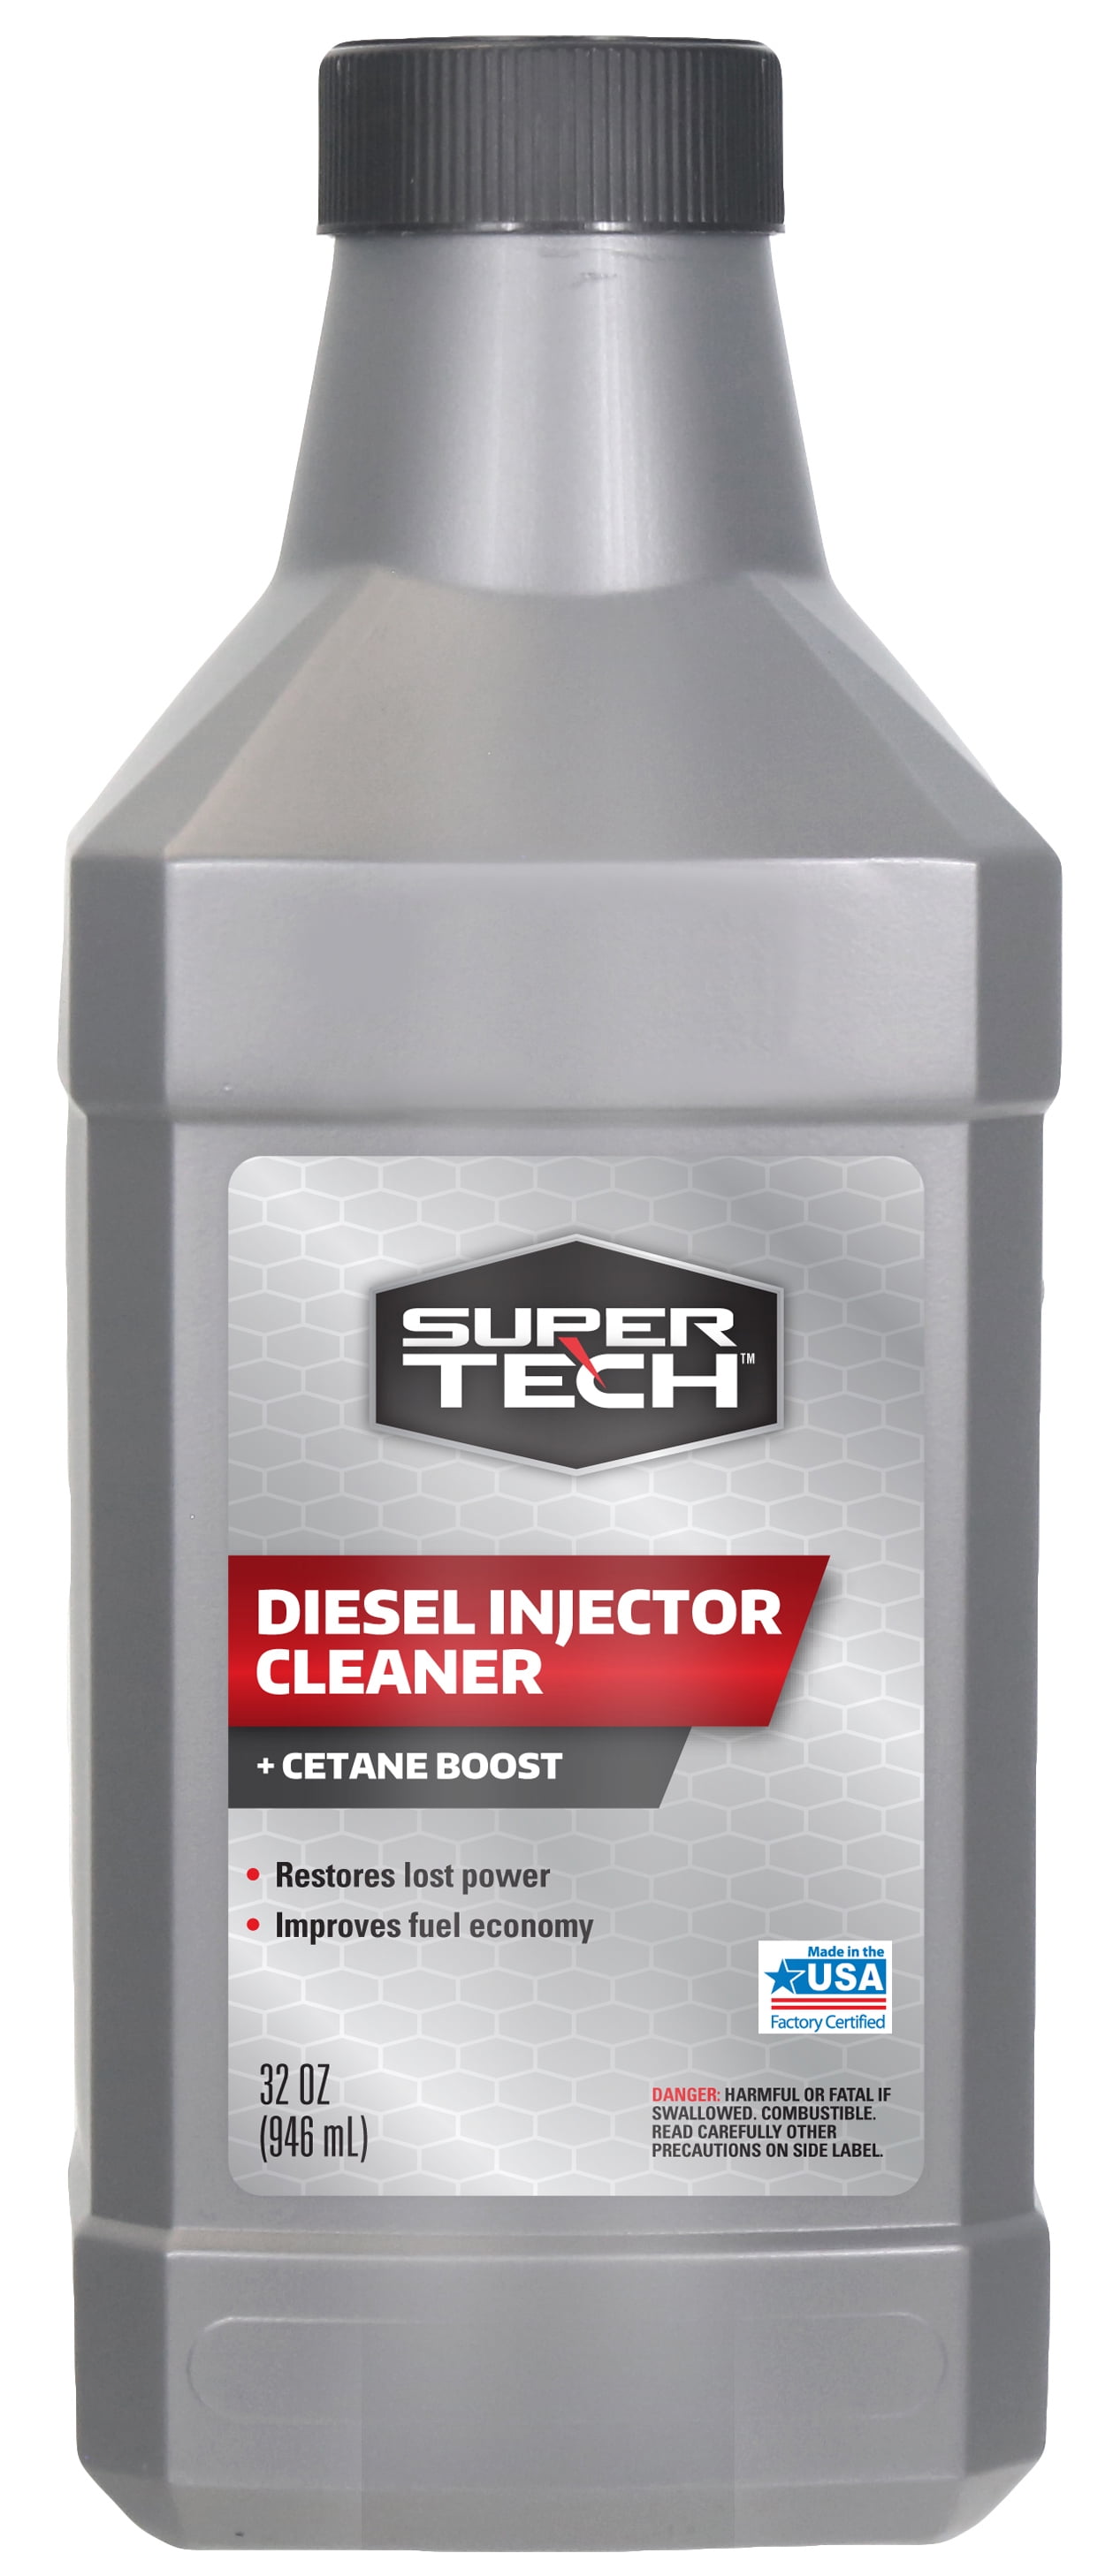 Super Tech Carburetor Cleaner 10% Voc, 10 oz. 46880